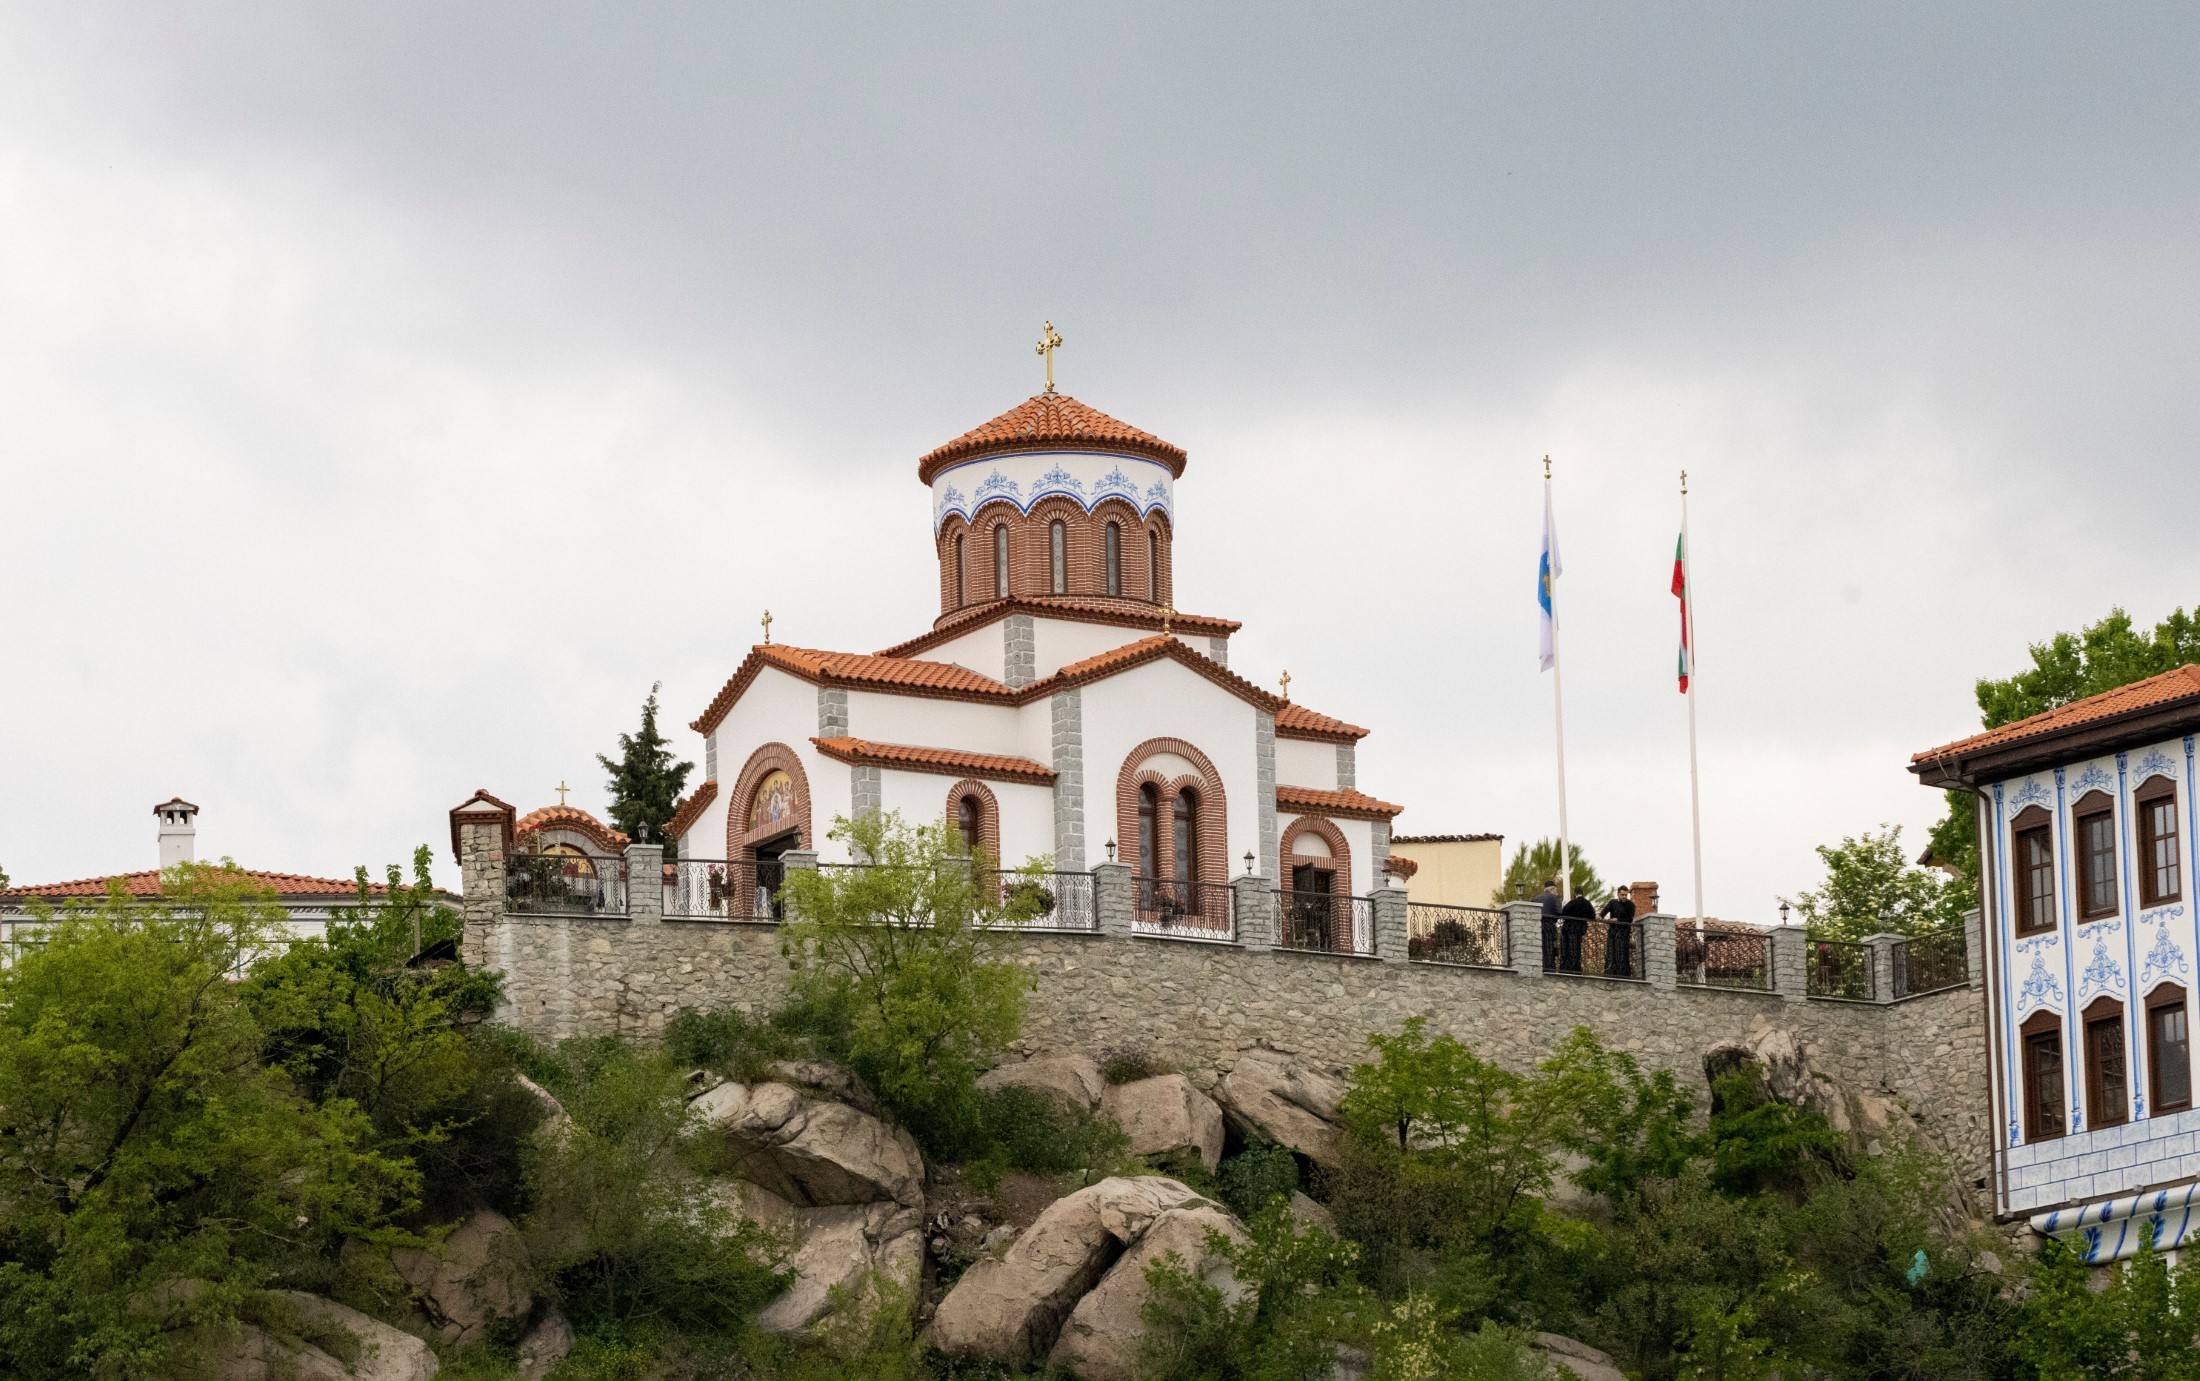 New orthodoxic church in Plovdiv, Bulgaria